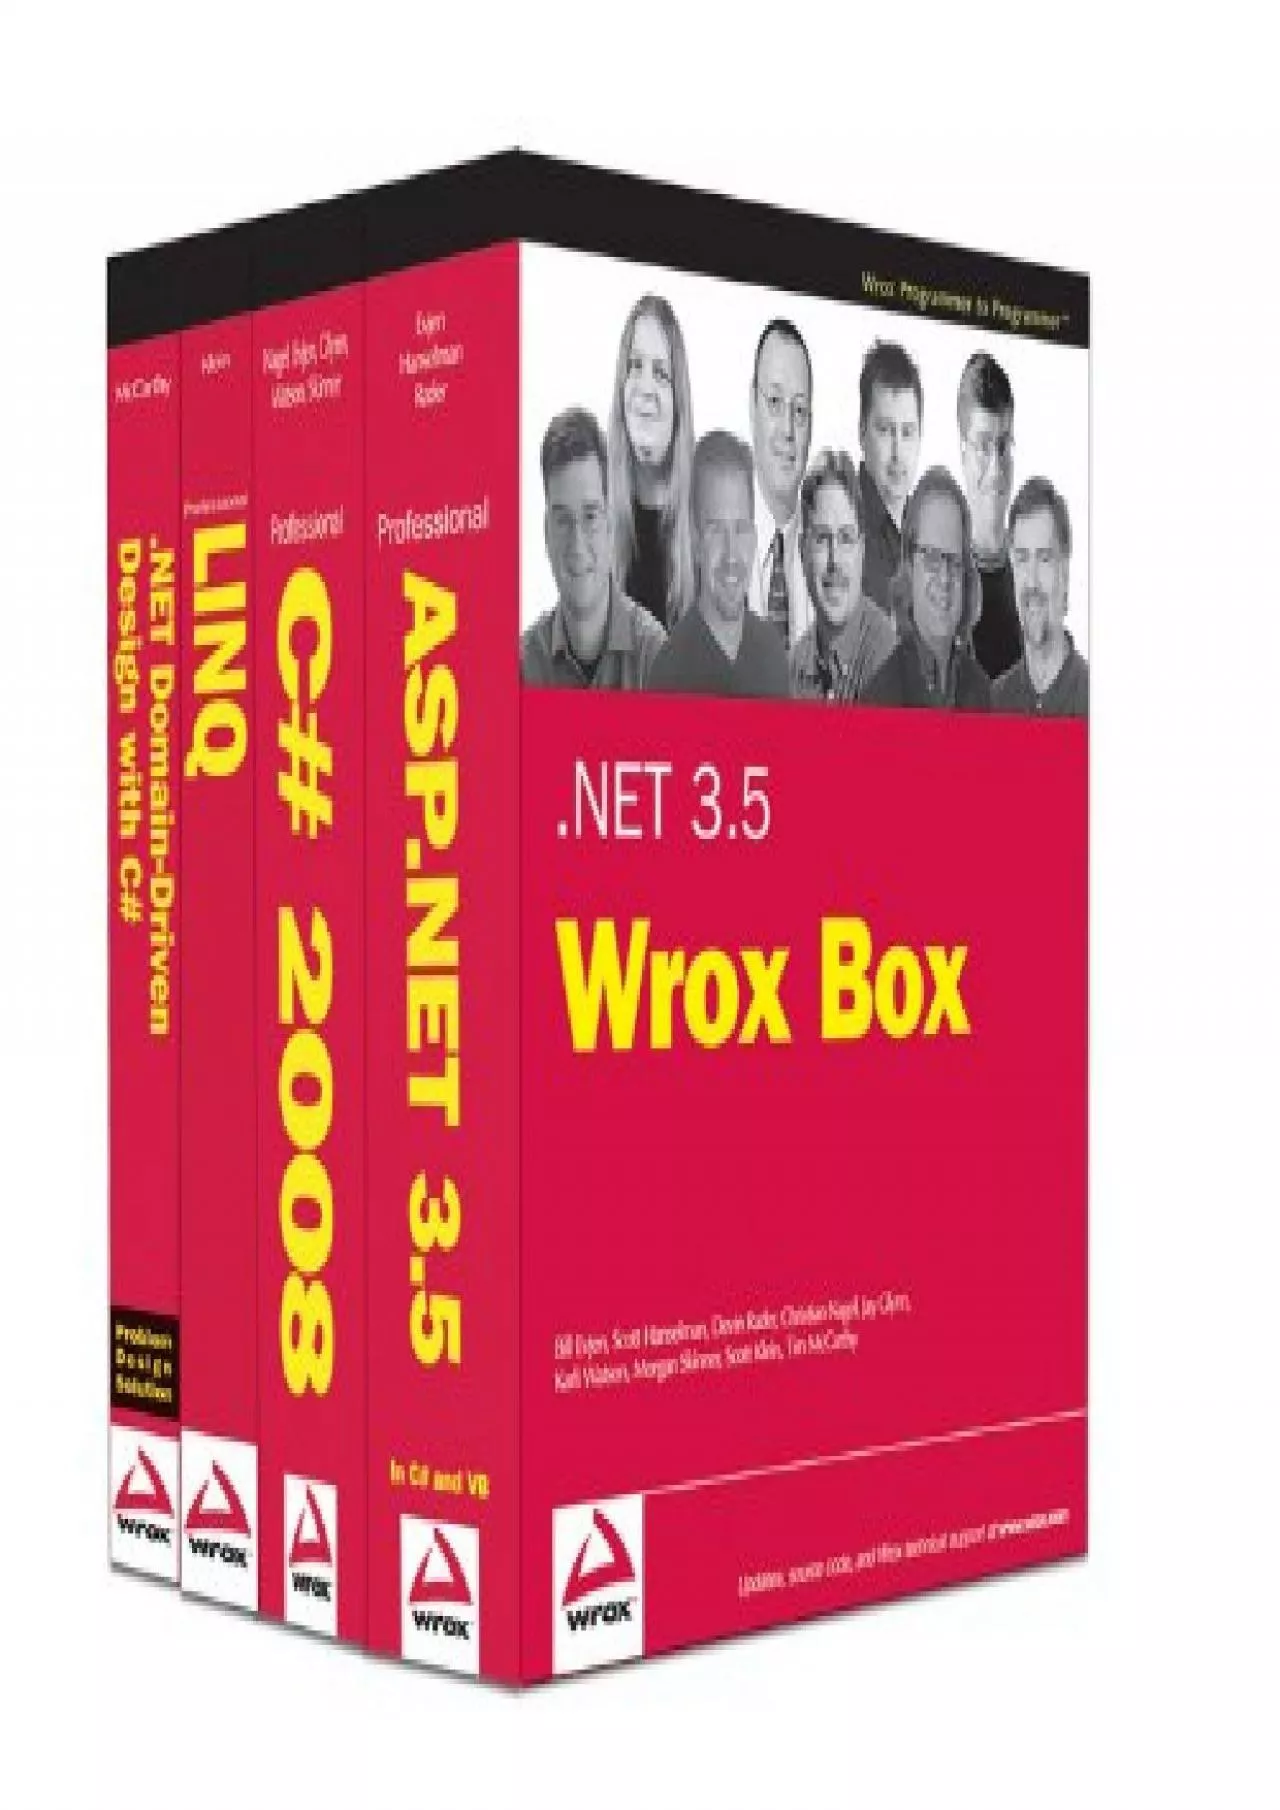 [DOWLOAD]-.NET 3.5 Wrox Box: Professional ASP.NET 3.5, Professional C 2008, Professional